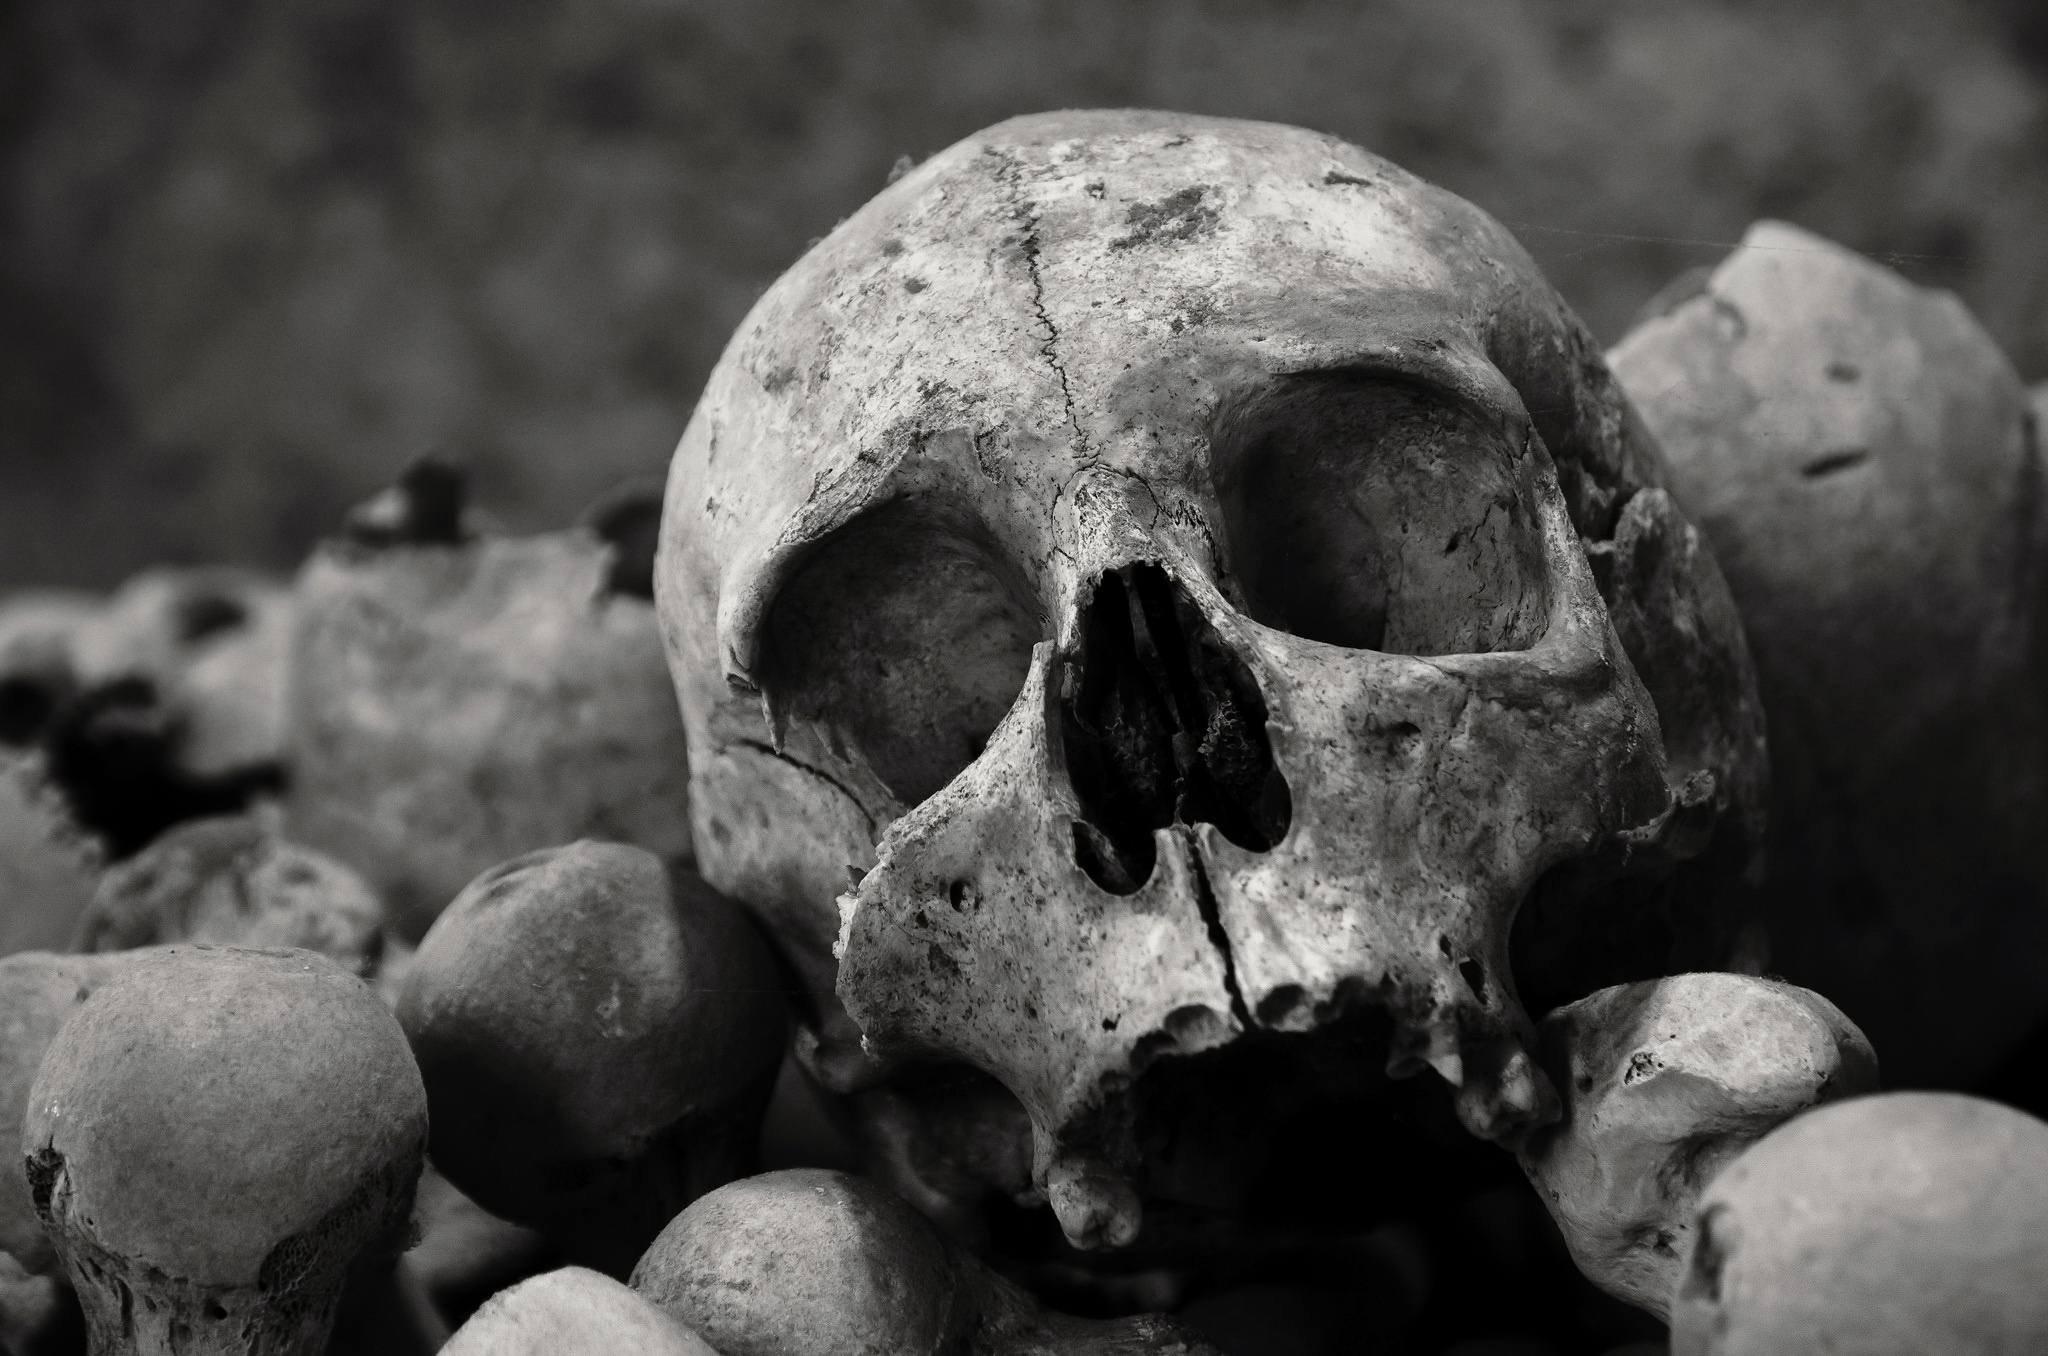 General 2048x1356 monochrome skull bones dark